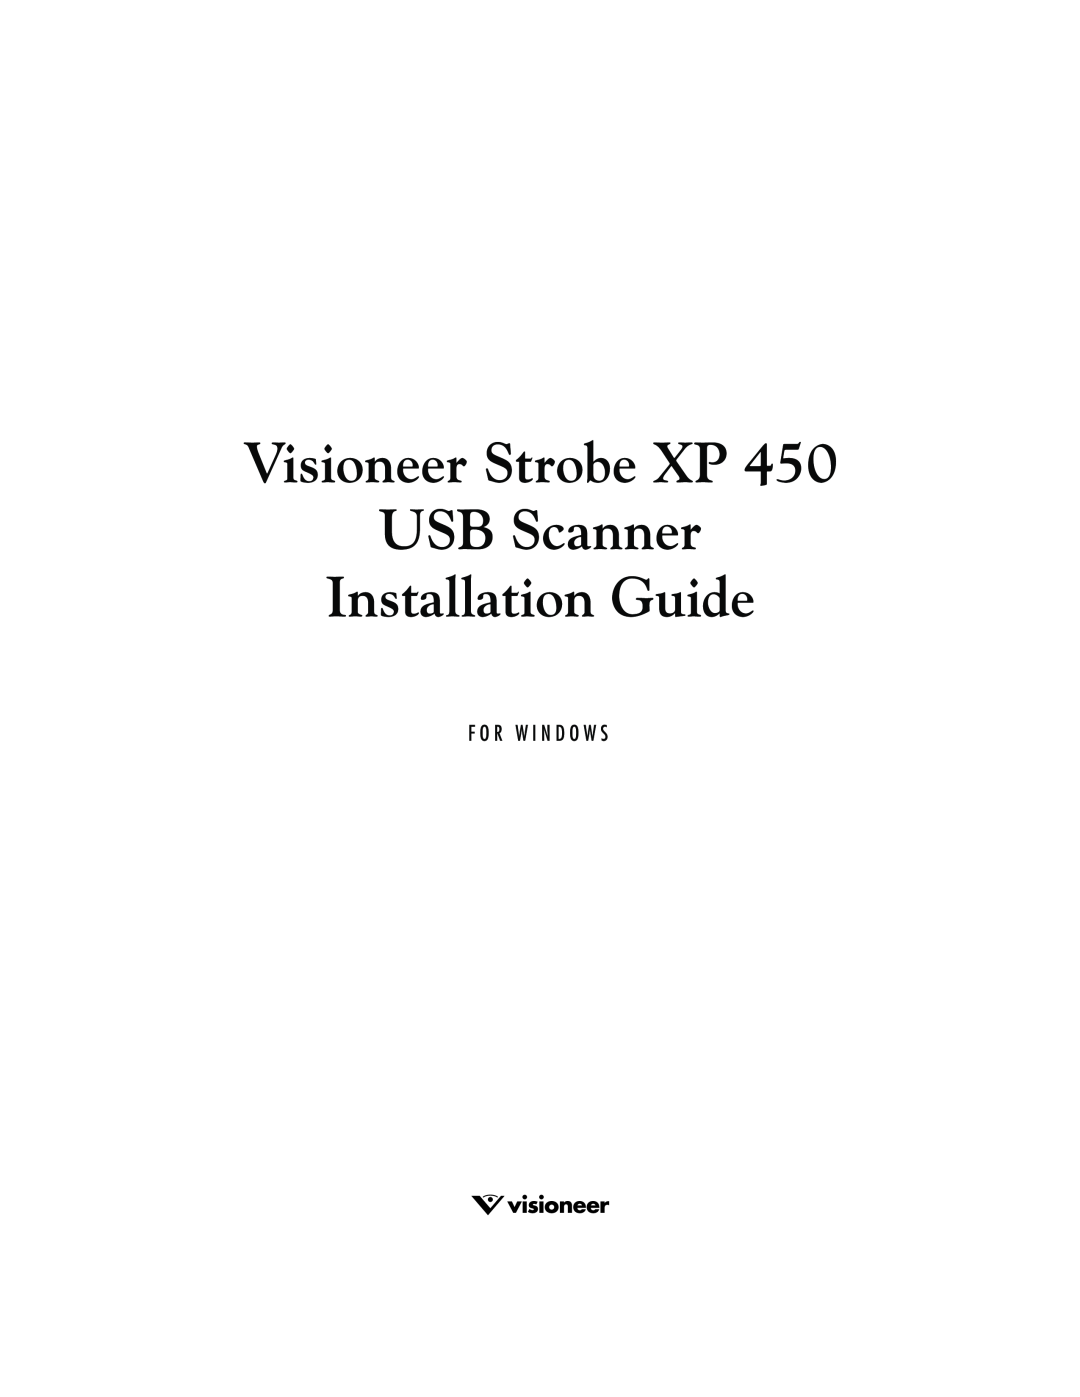 Visioneer XP 450 manual Visioneer Strobe XP USB Scanner Installation Guide, F O R W I N D O W S 